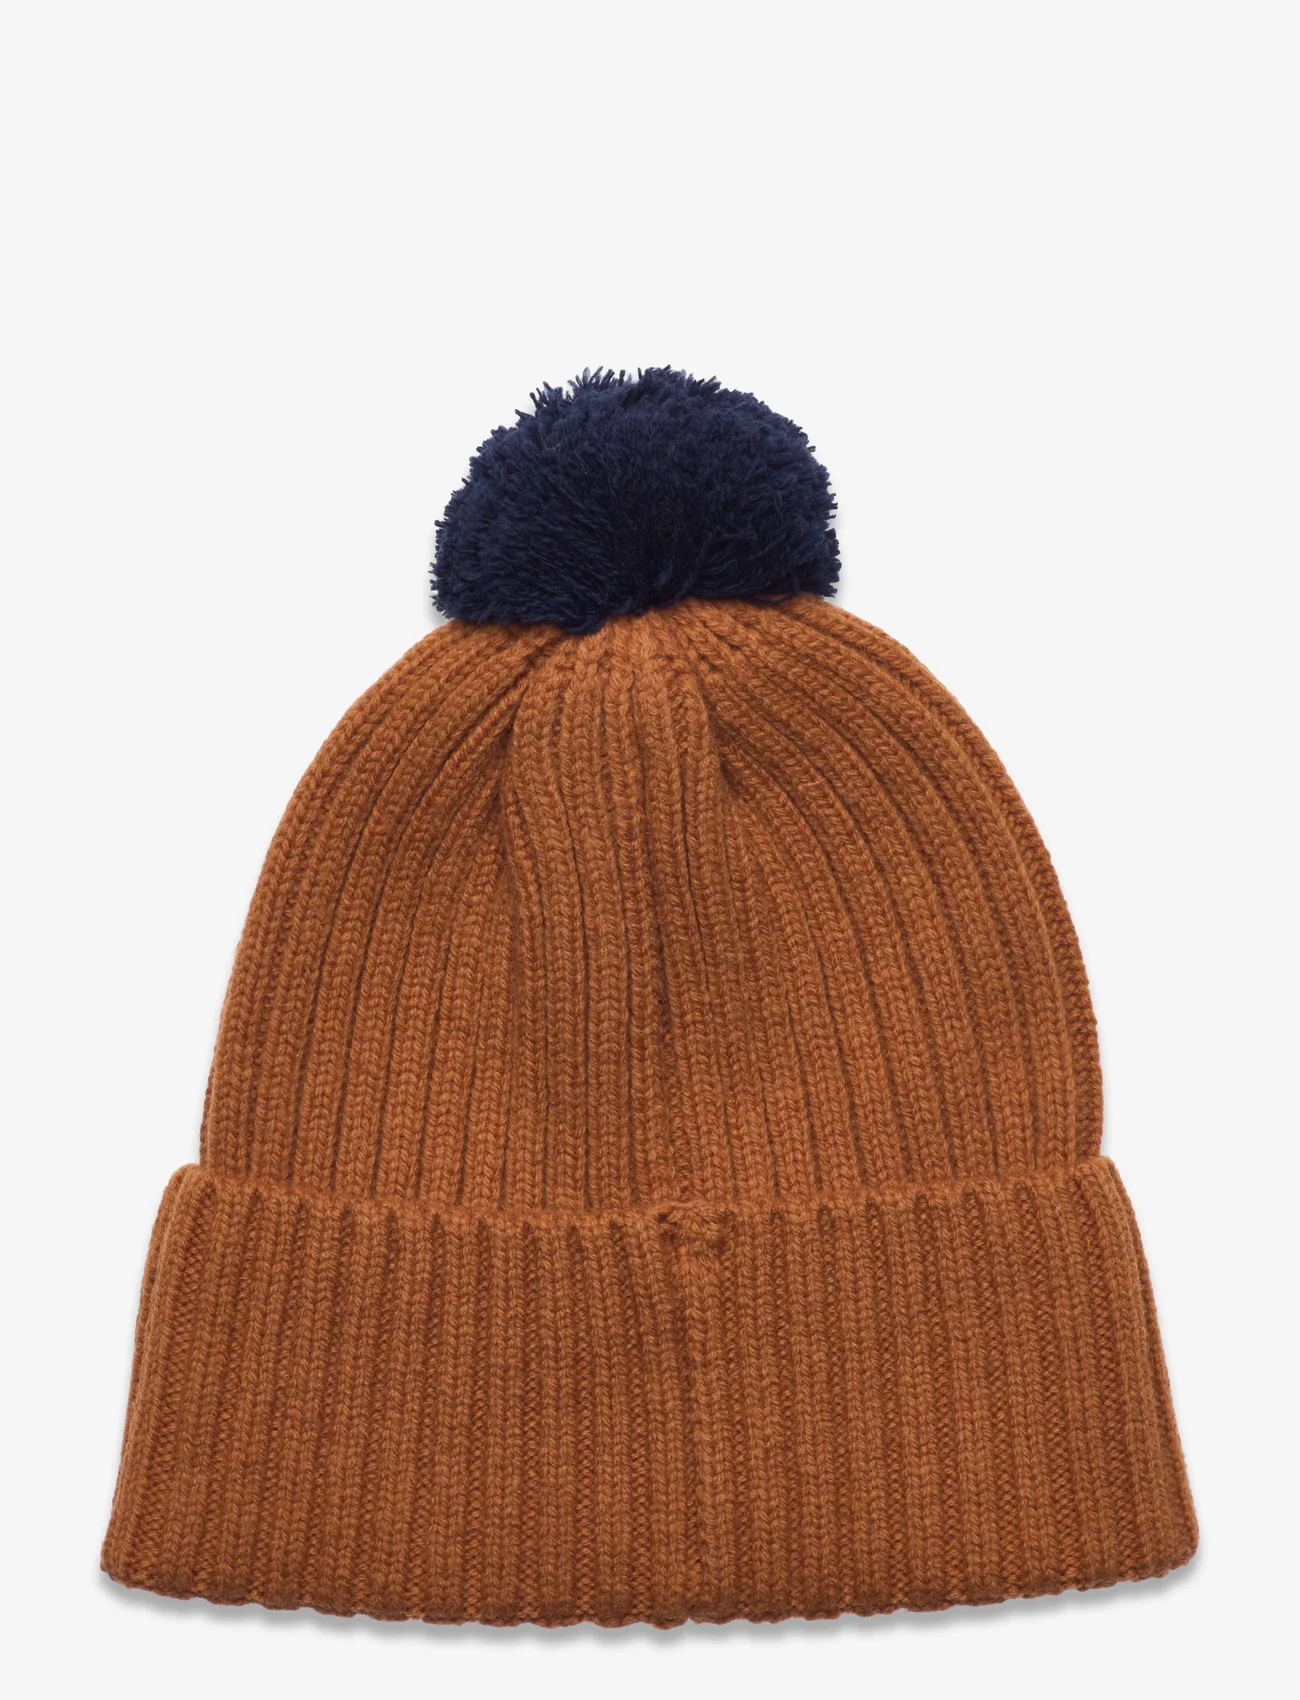 Reima - Beanie, Topsu - winter hats - cinnamon brown - 1